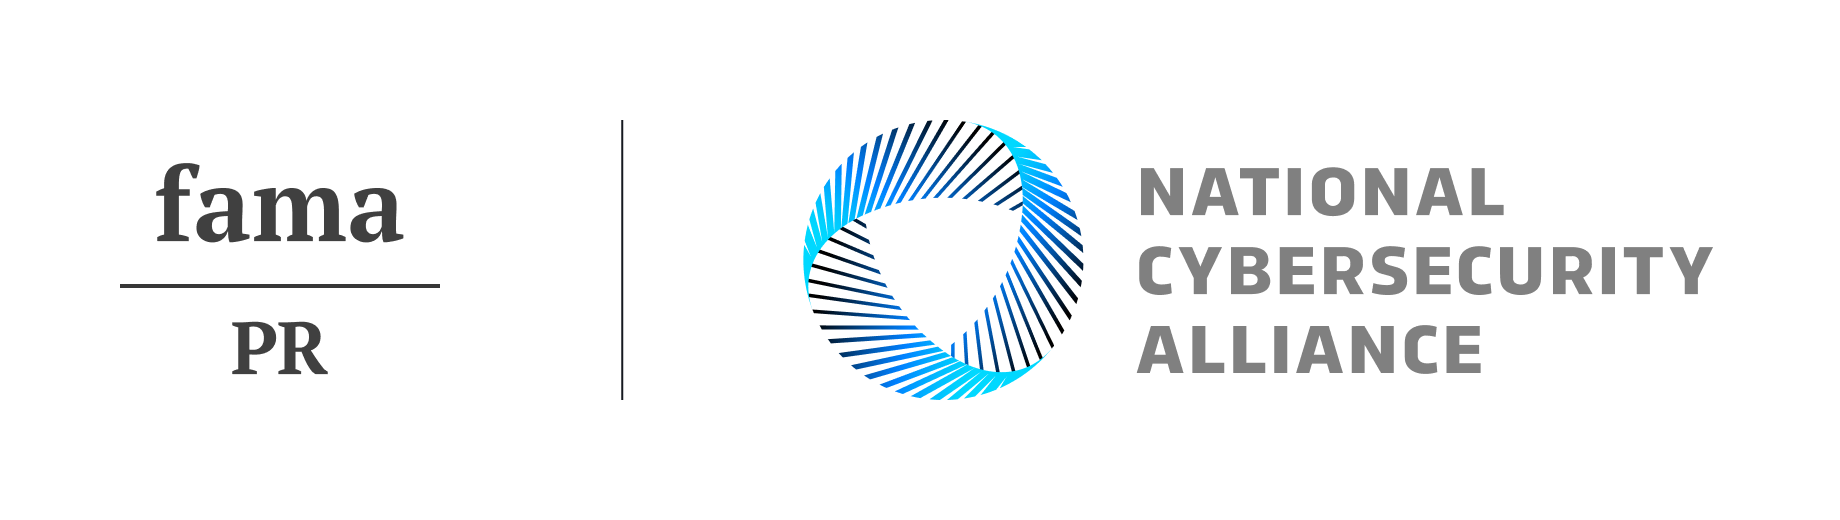 famaPR _ NCA - logo lockup_big